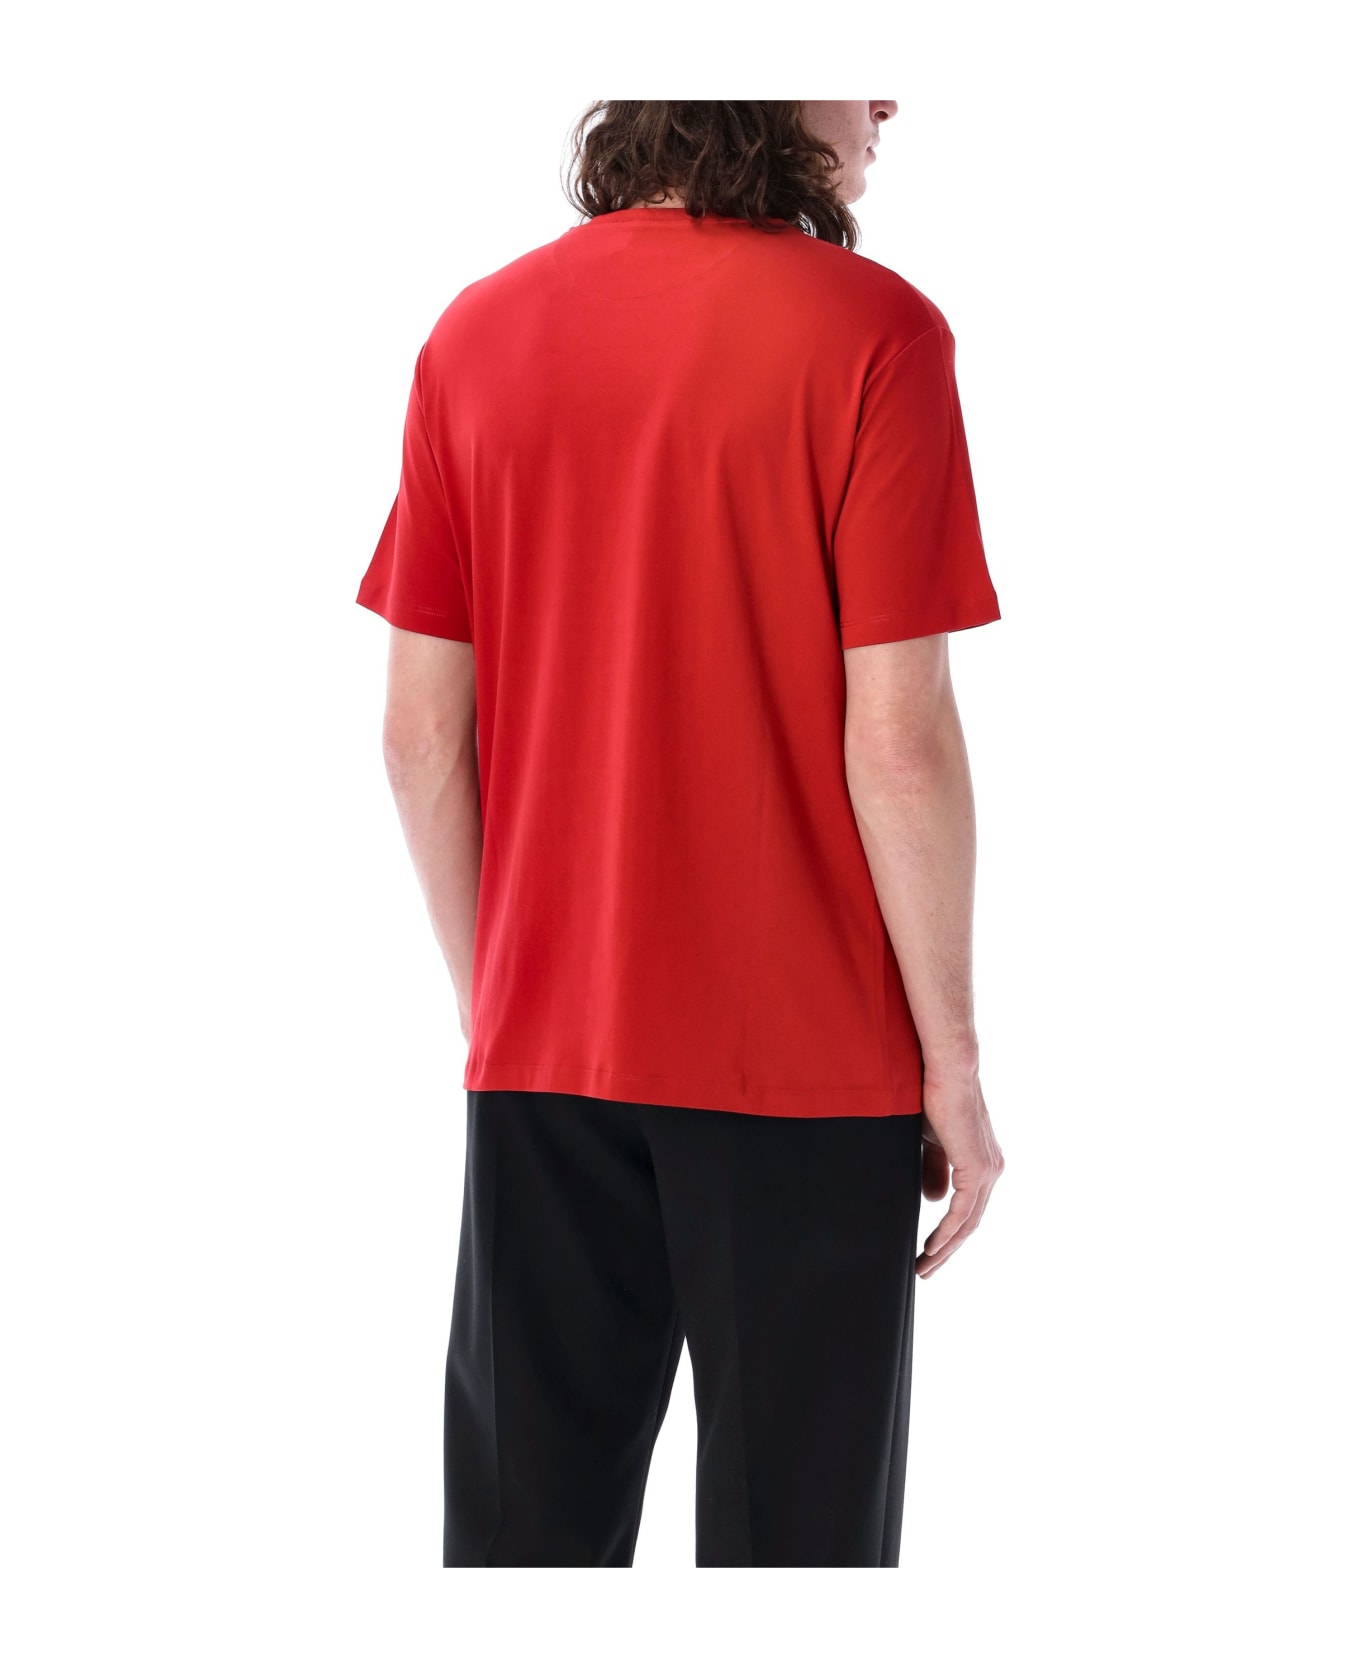 Bally Logo T-shirt - RED LAVA